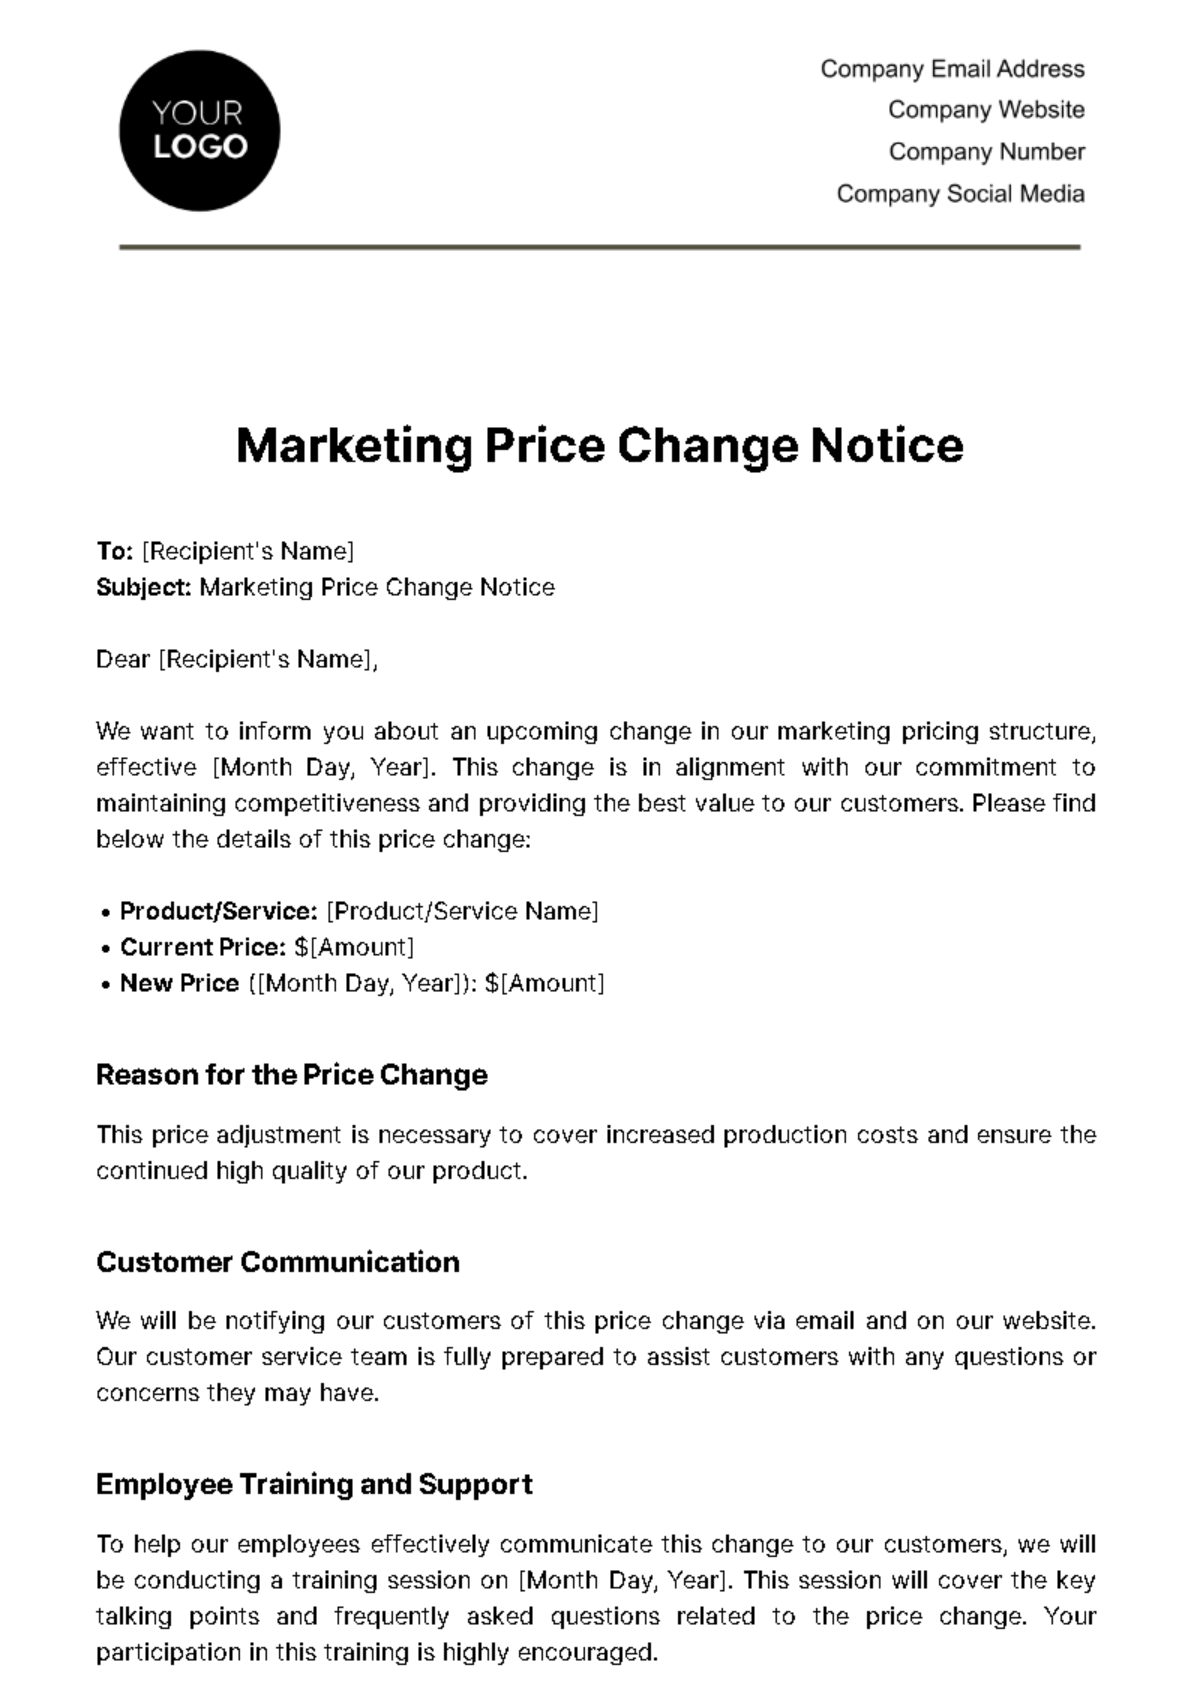 Marketing Price Change Notice Template